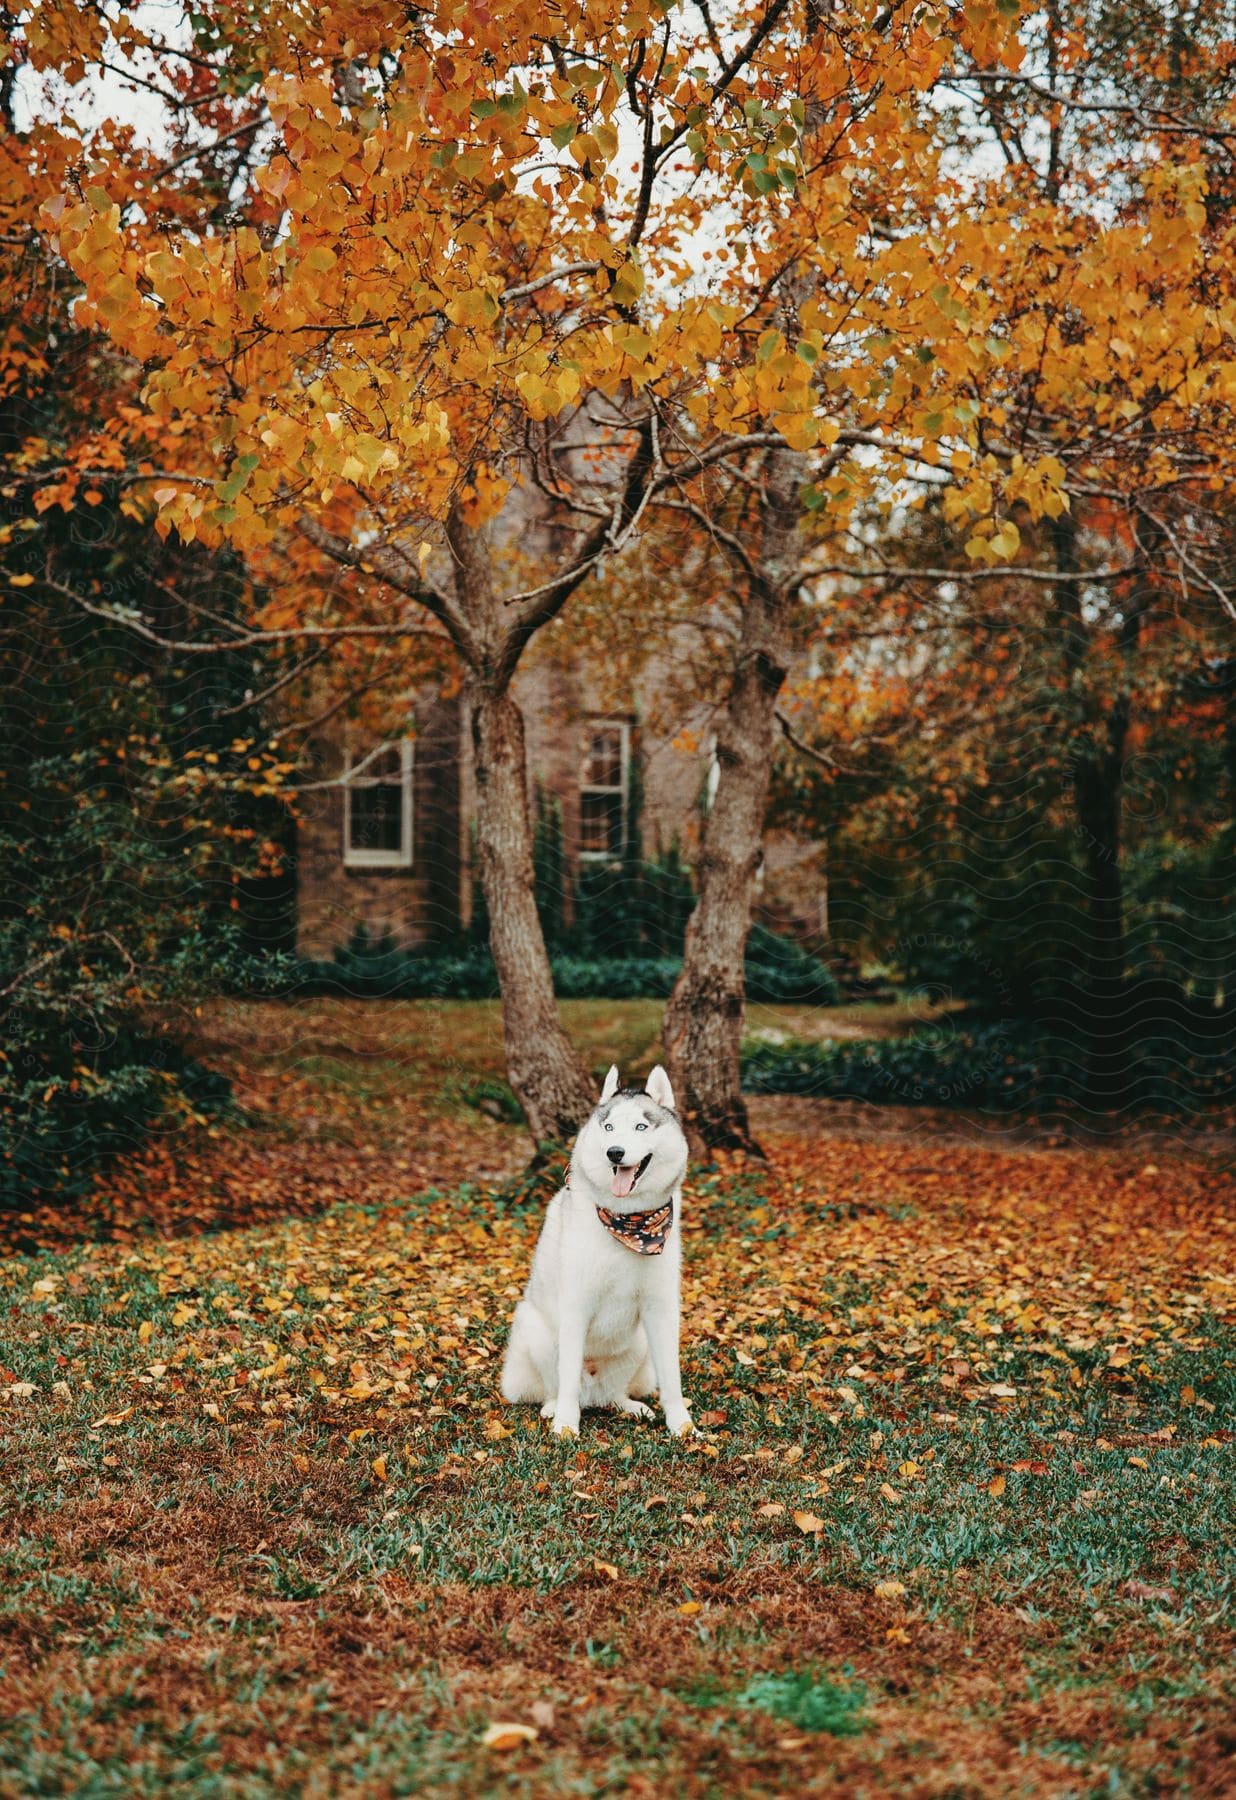 Dog wearing bandana sits among fallen leaves in yard of large house.